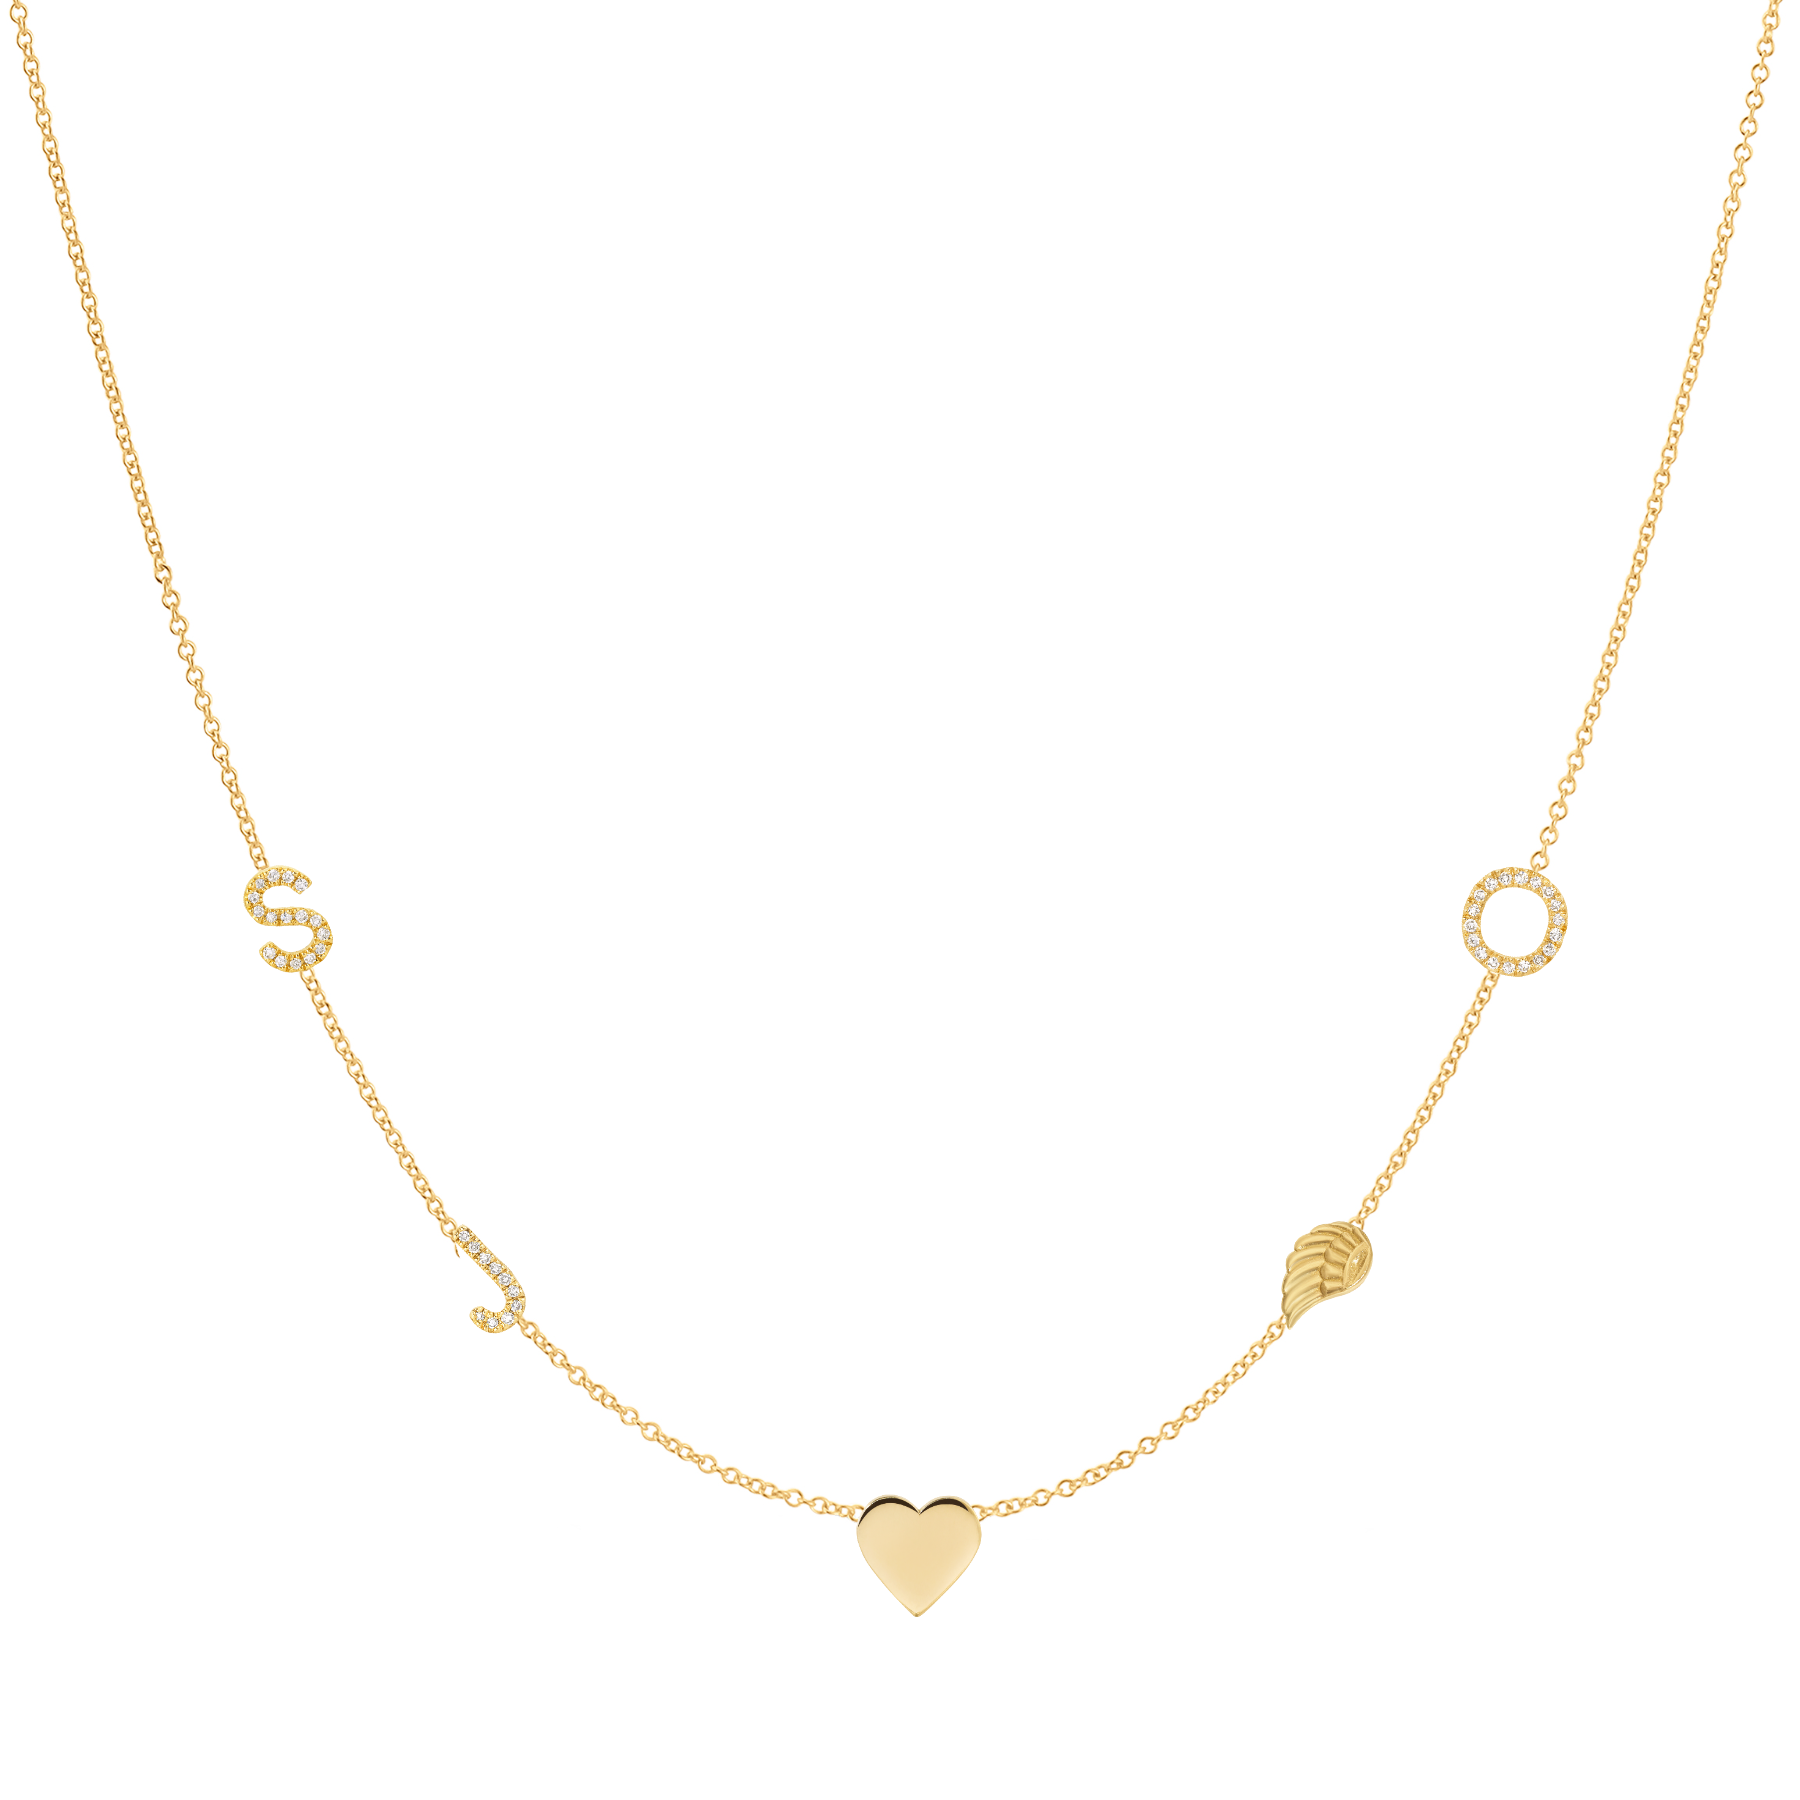 Handmade Yellow Gold Initial Monogram Charm Necklace - Custom